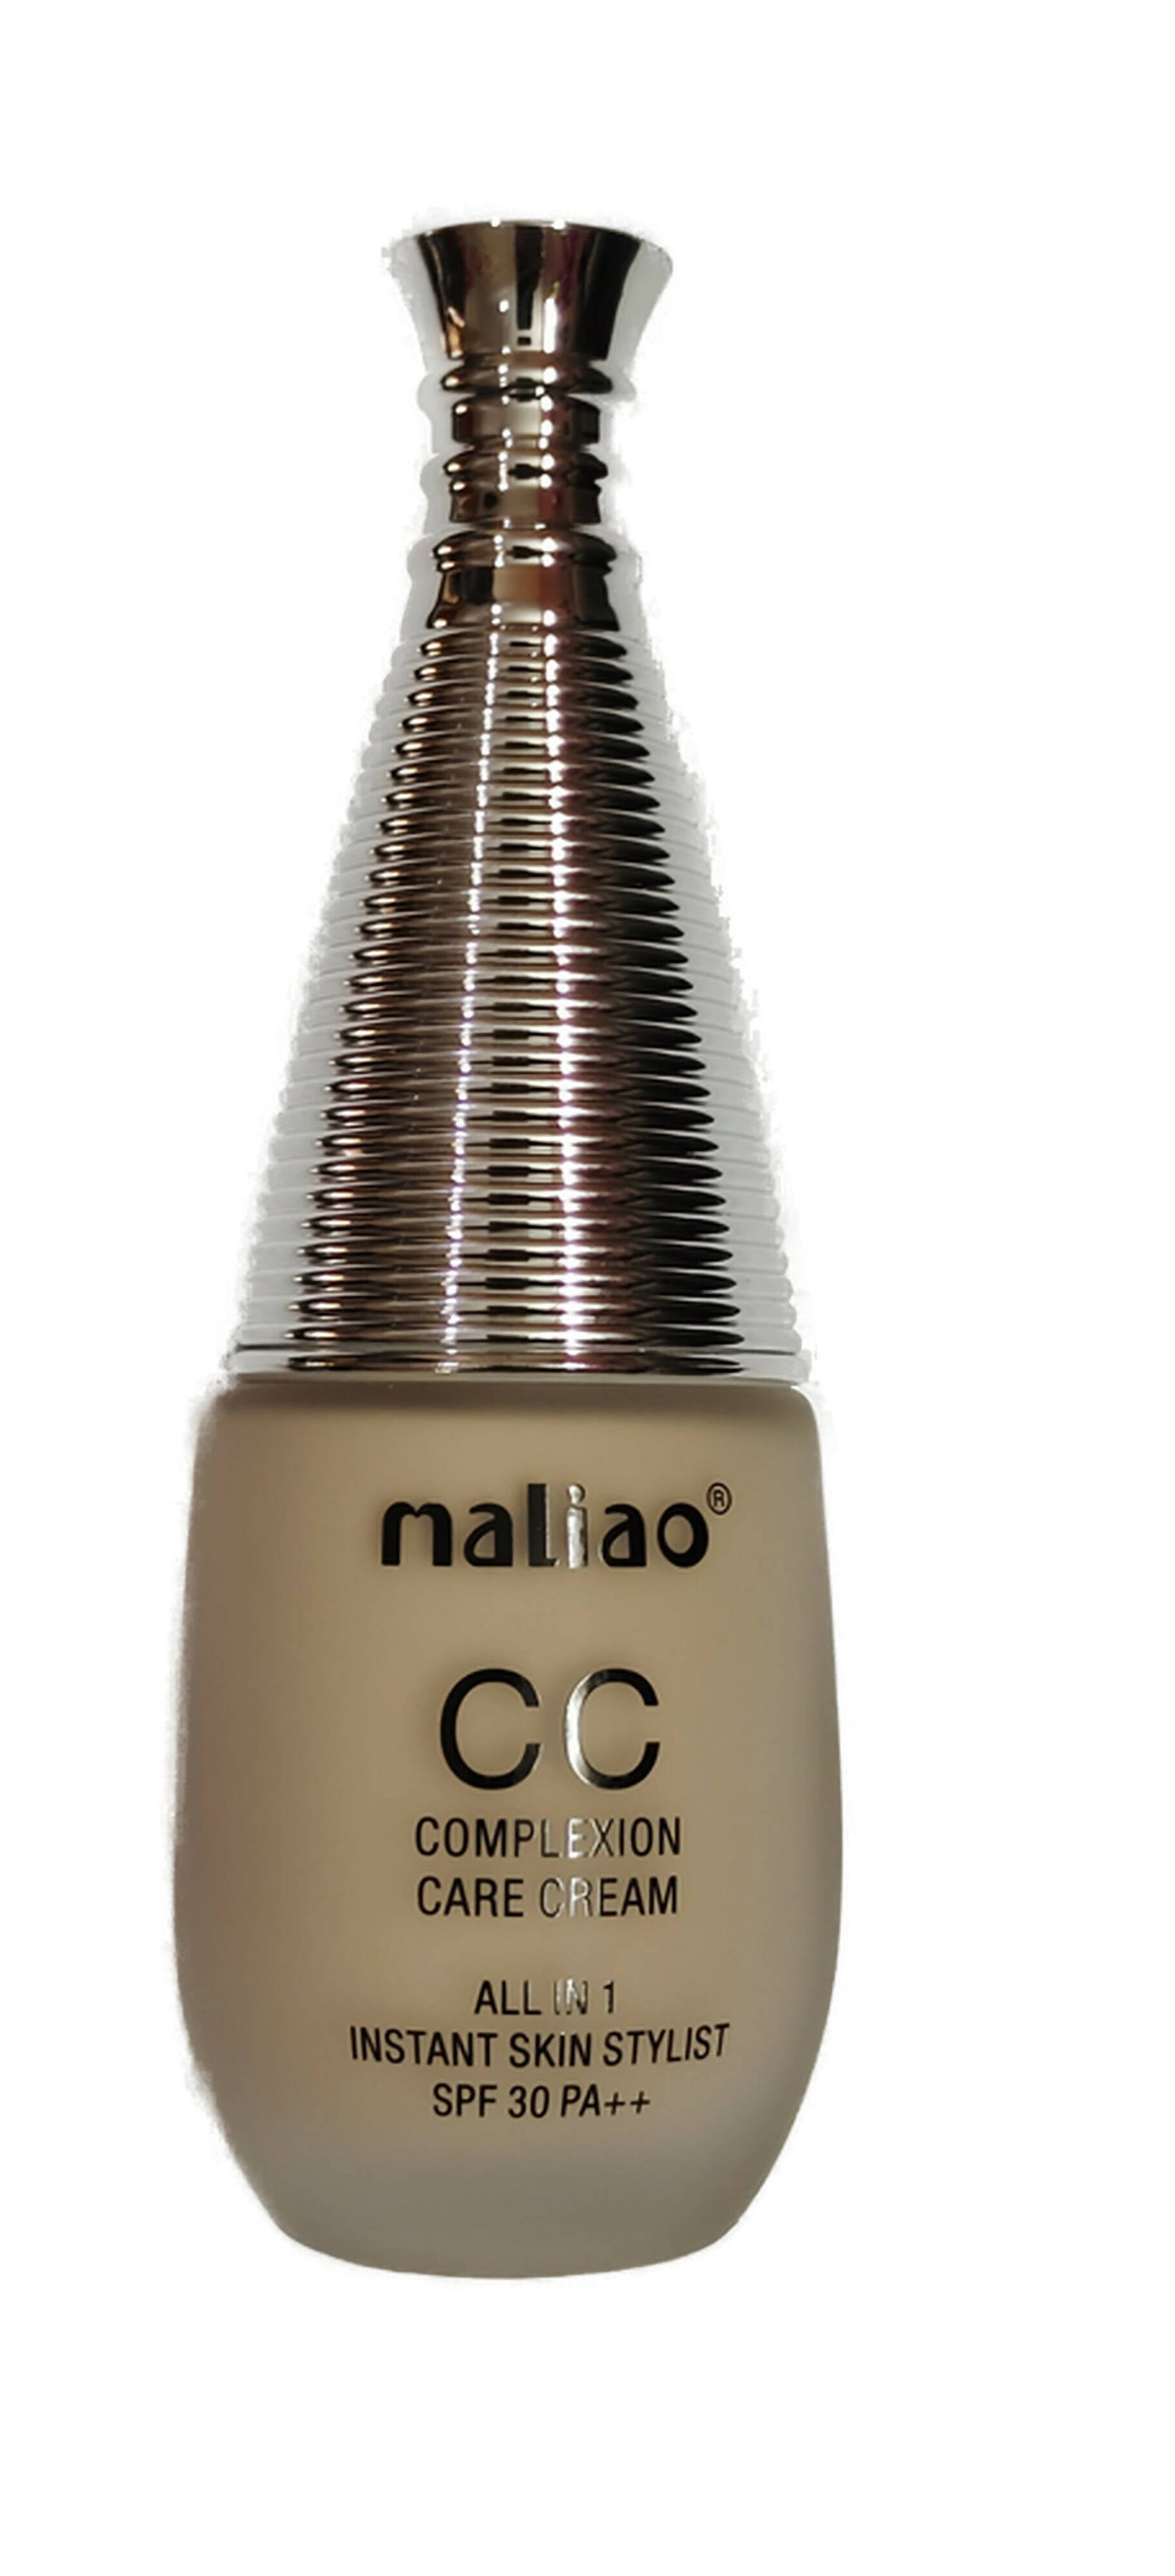 Maliao Cc All In 1 Instant Skin Stylist Foundation SPF 30 Pa++